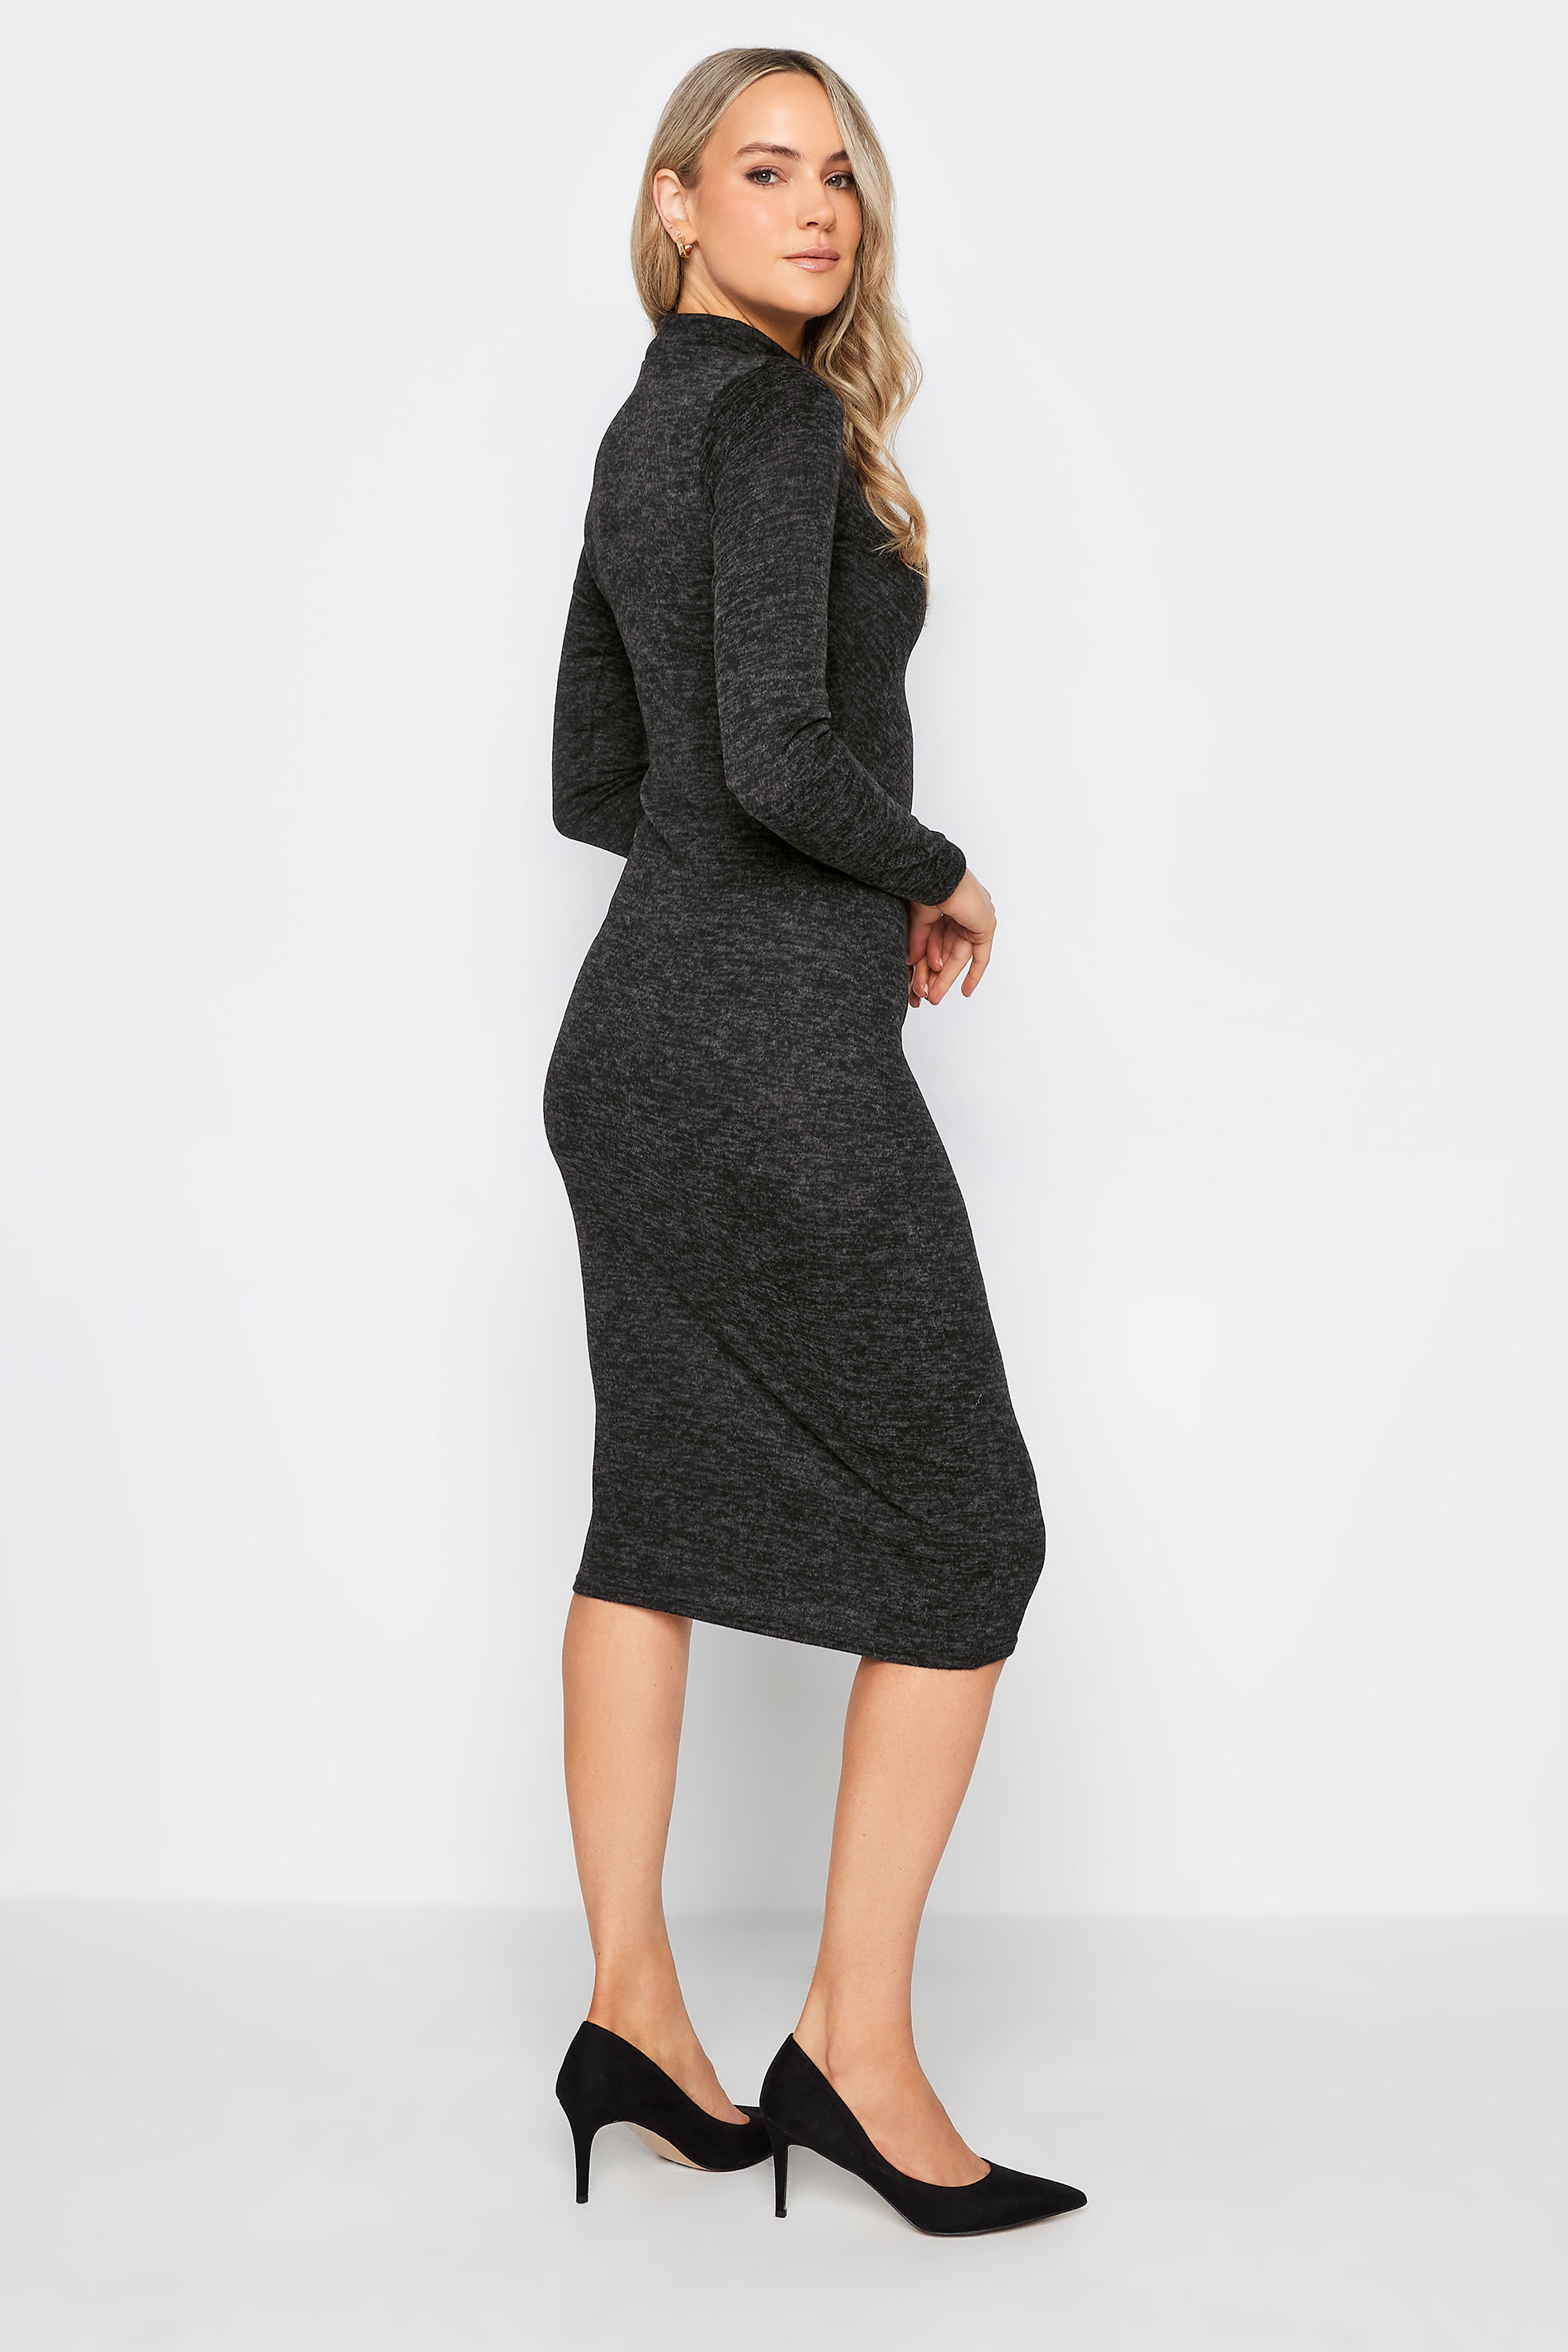 LTS Tall Women's Charcoal Grey Ruched Midi Dress | Long Tall Sally  3